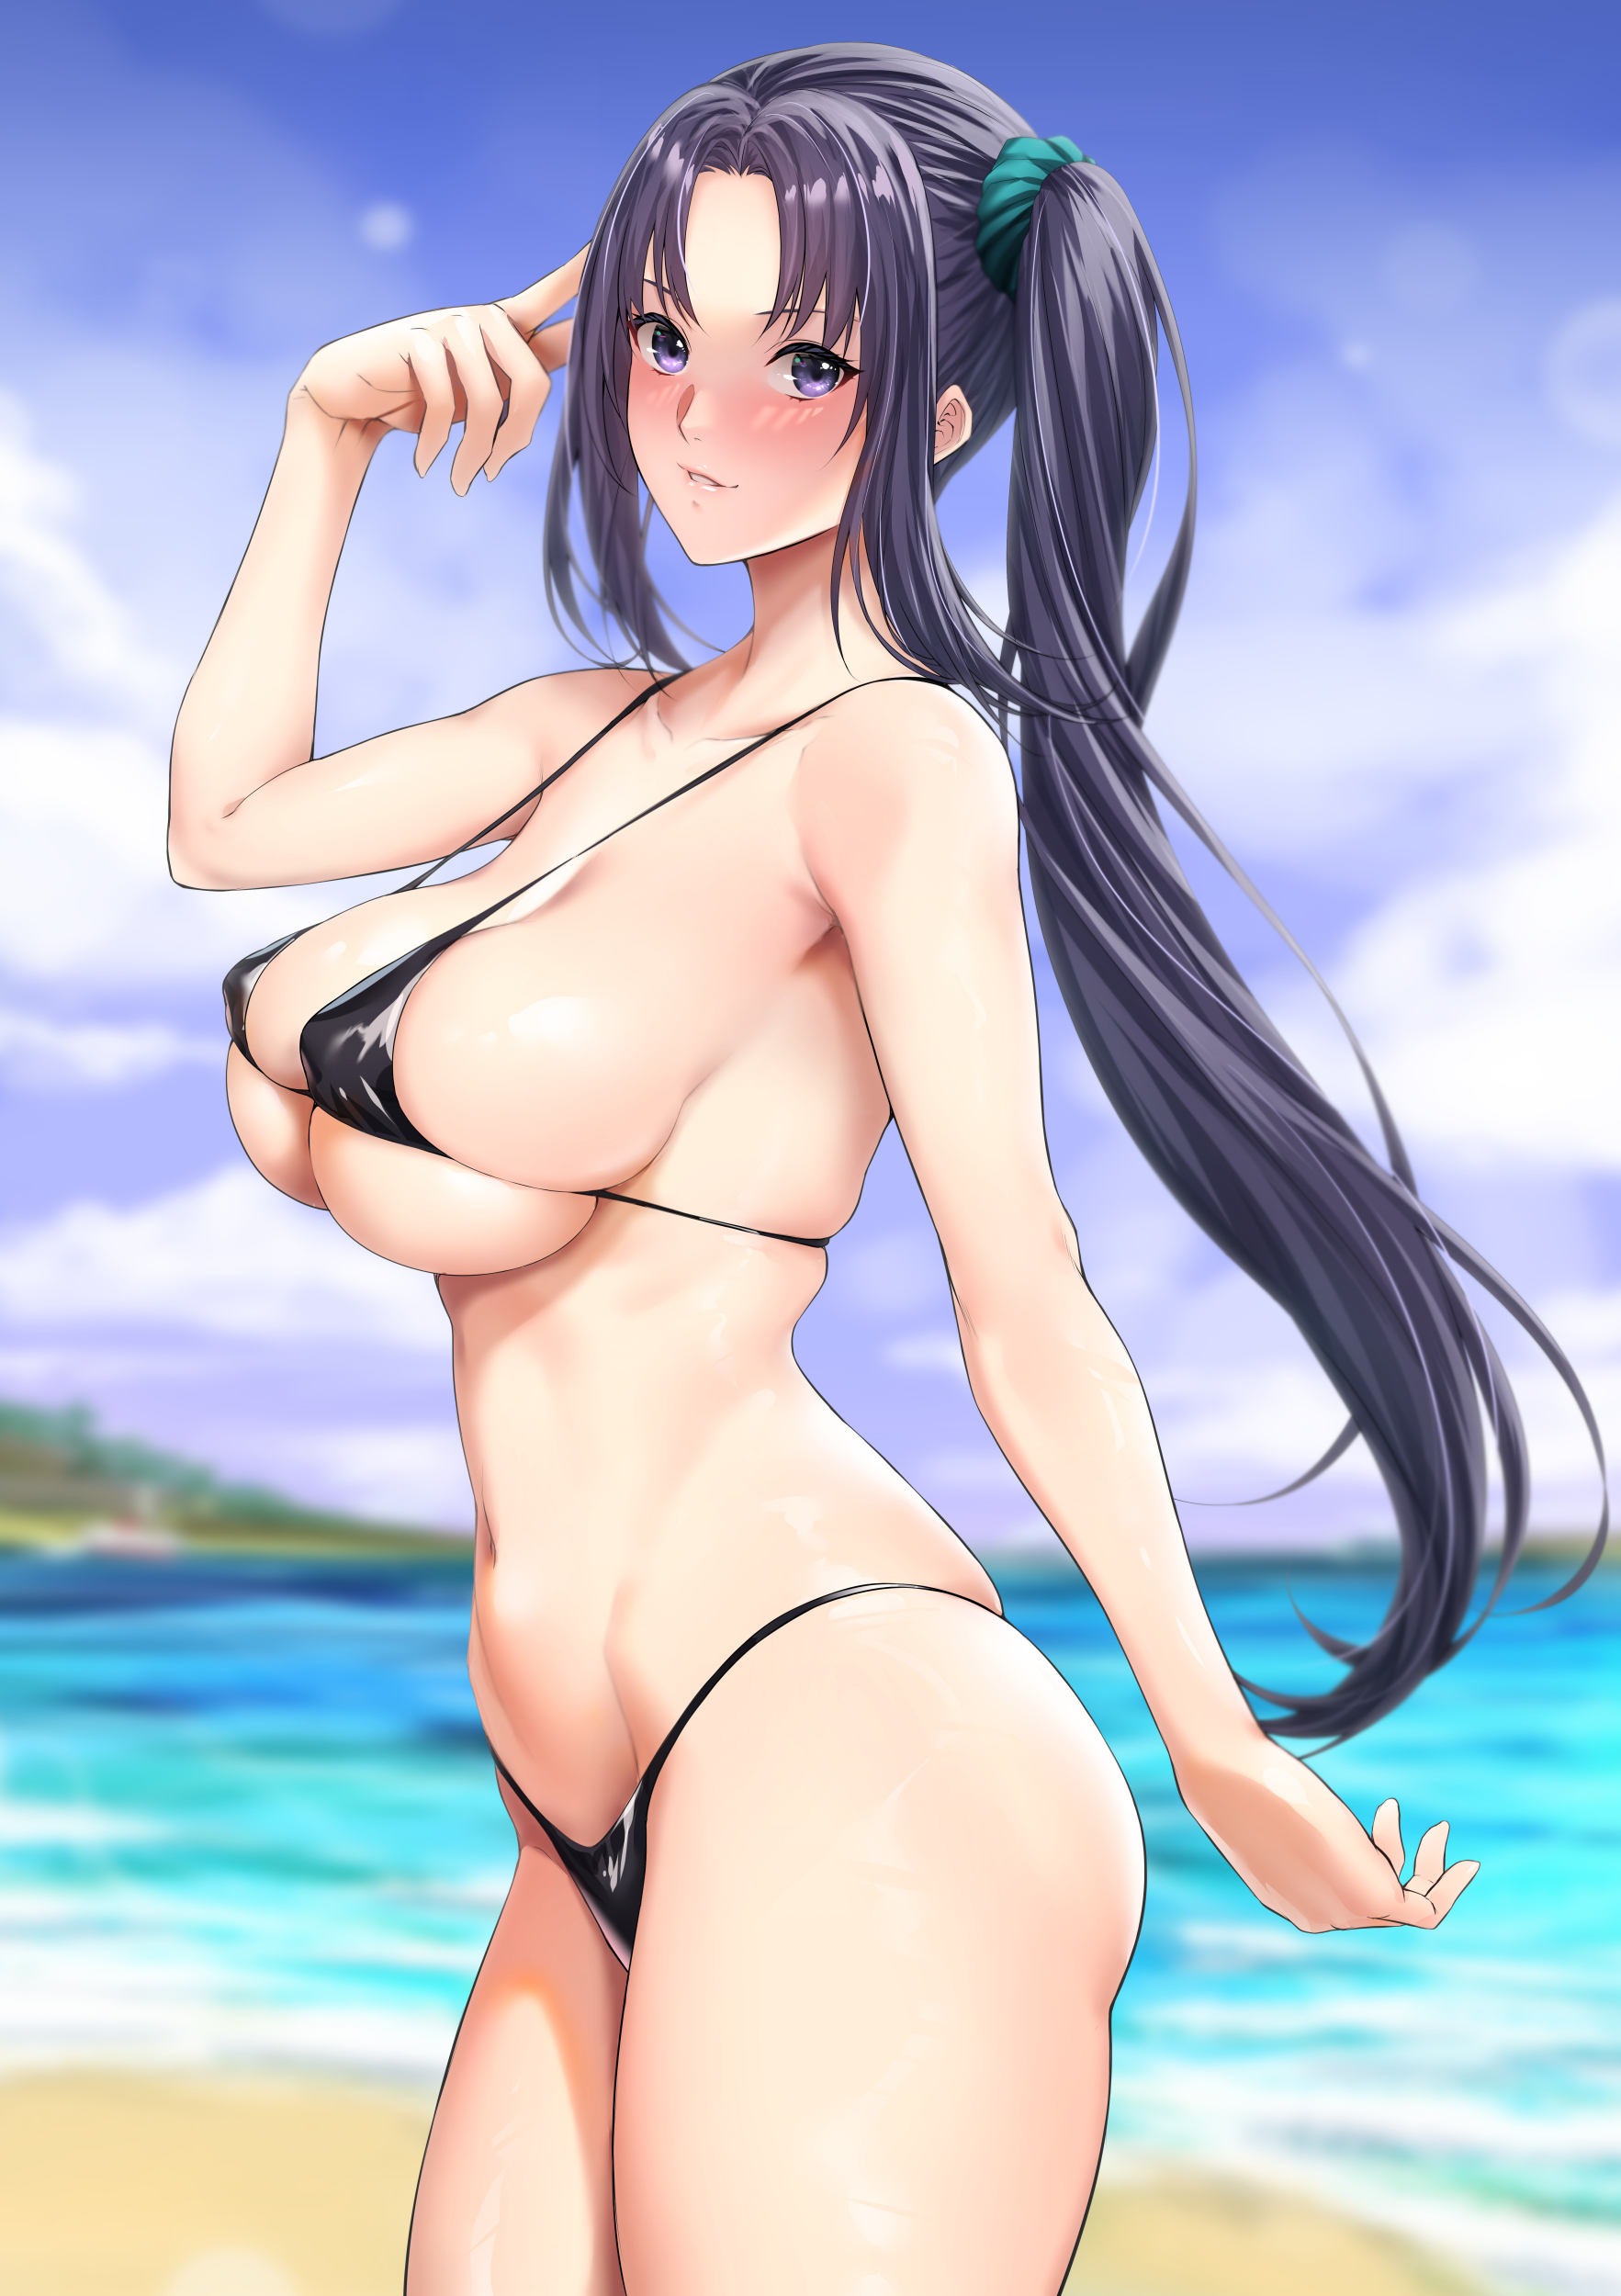 Anime 1765x2500 anime anime girls micro bikini big boobs beach water blushing purple eyes purple hair long hair nipples through clothing nipple bulge one arm up